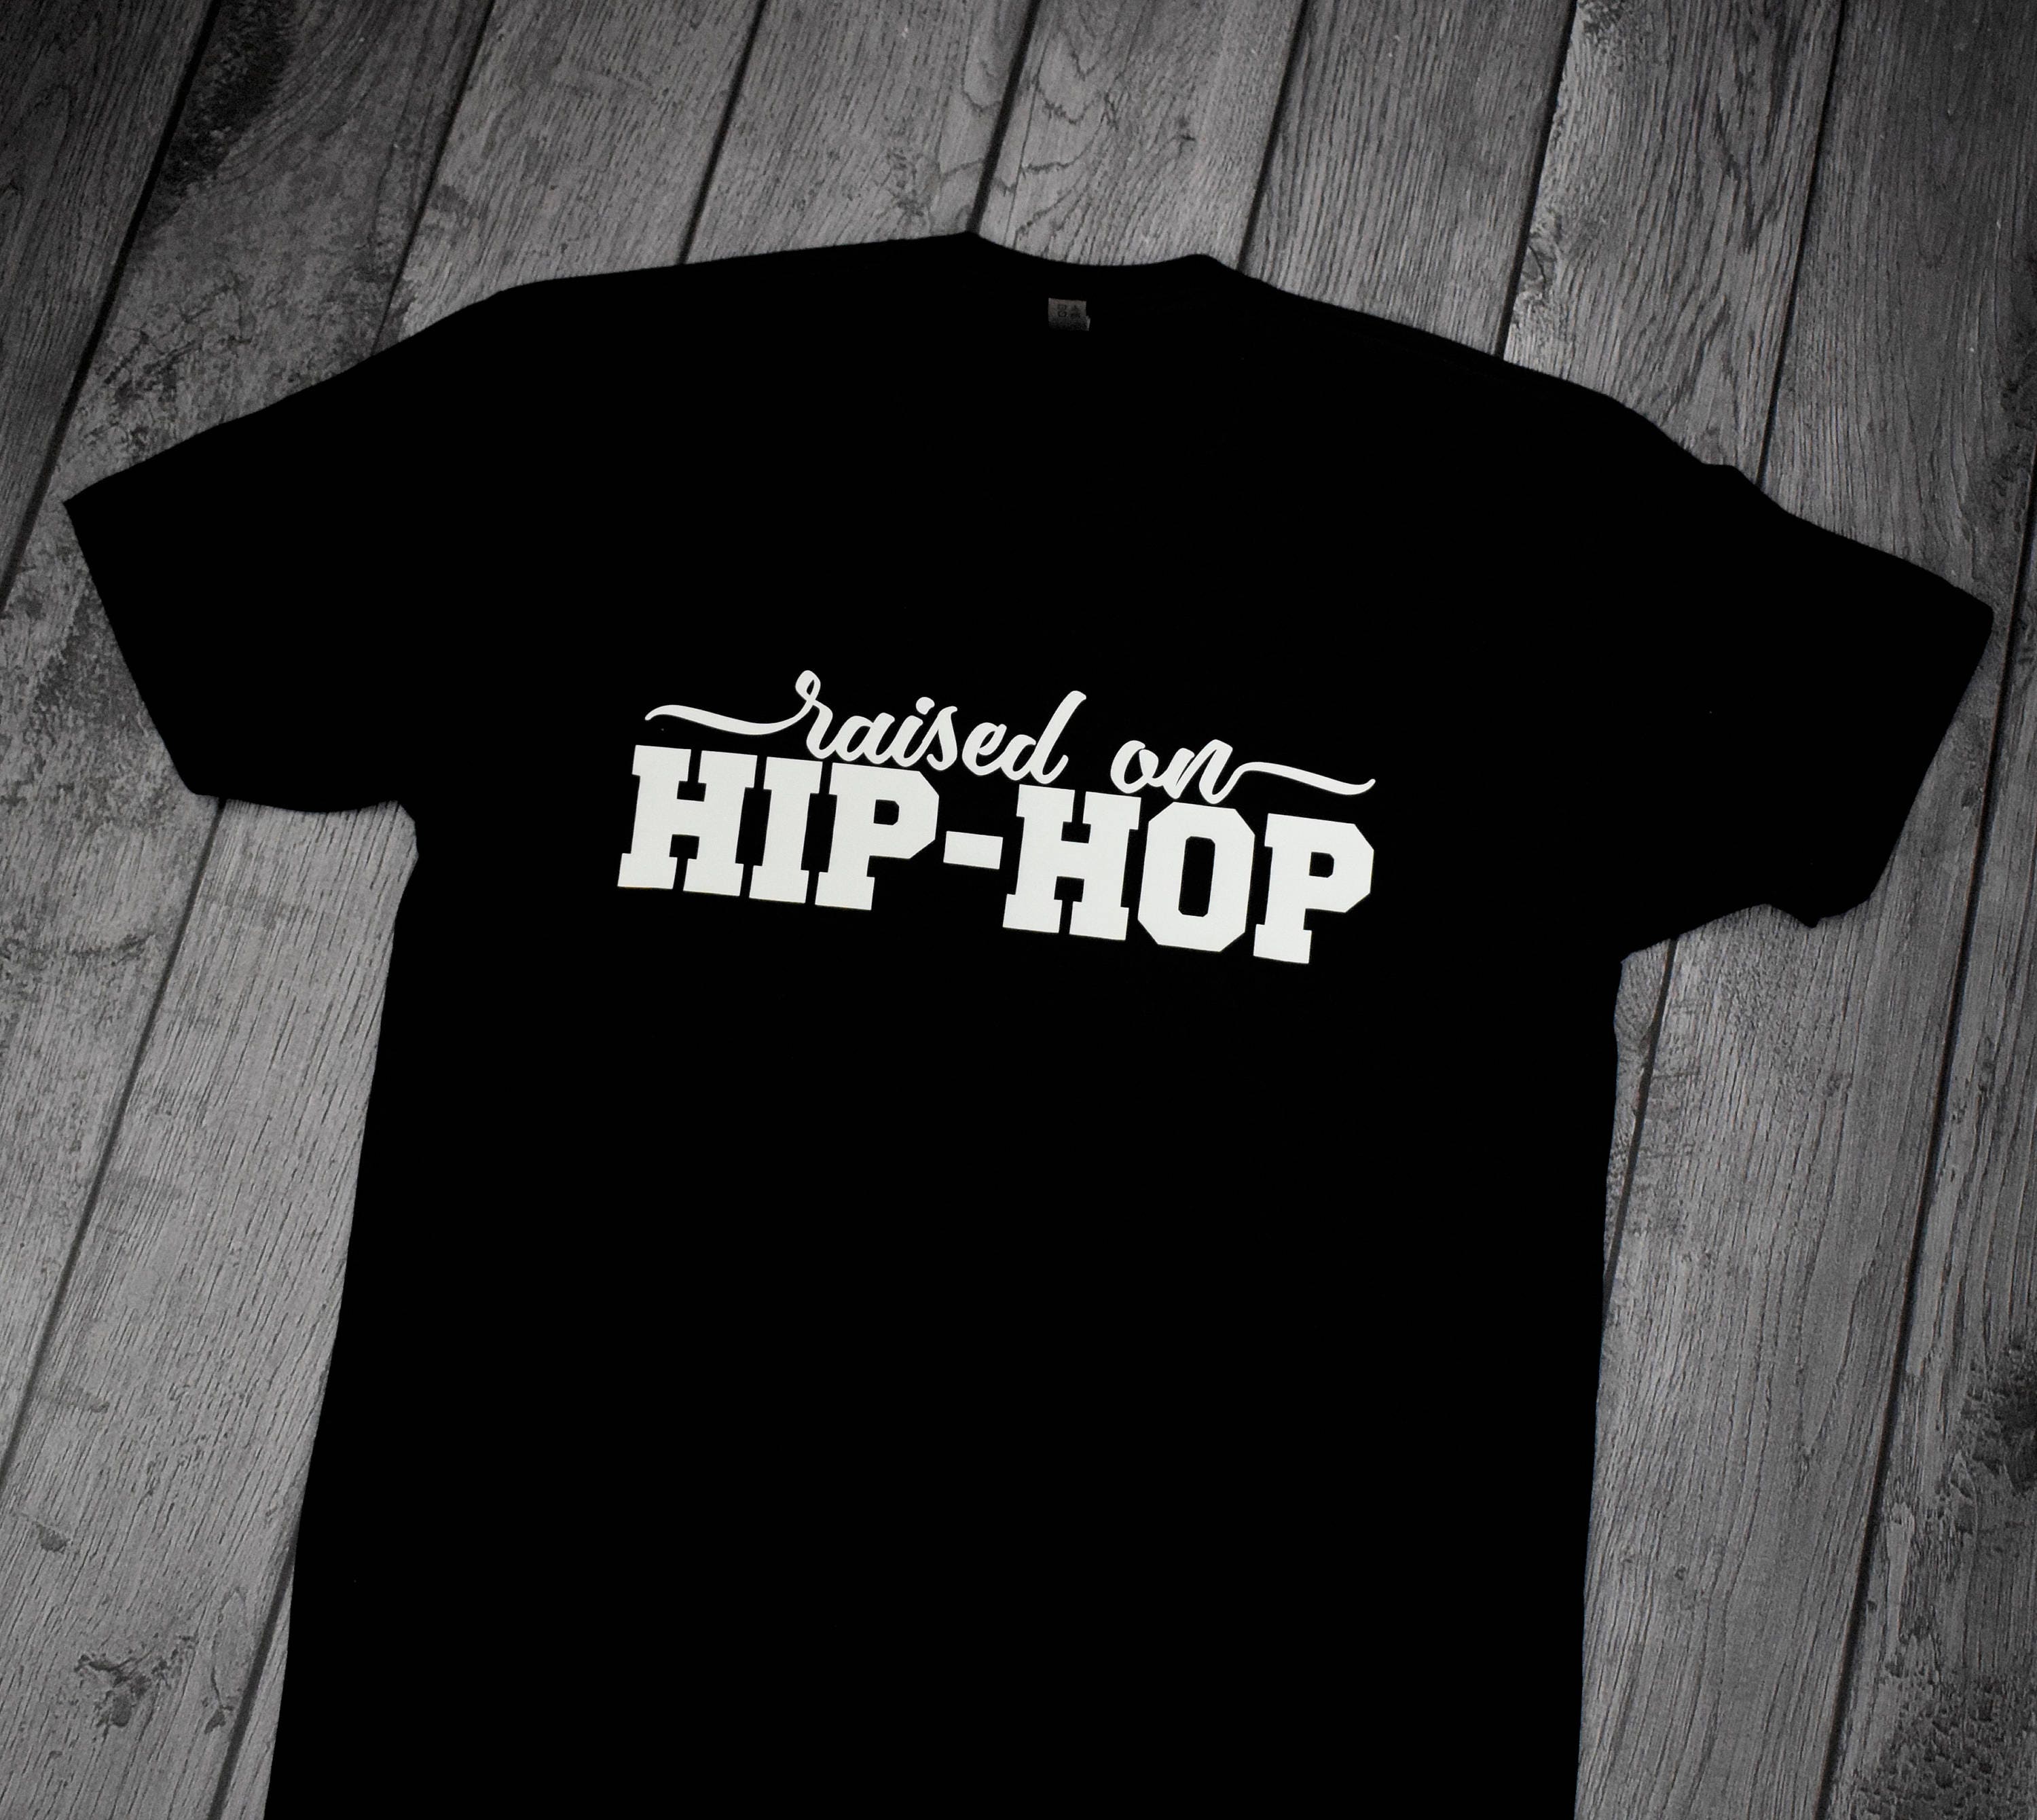 Хип хоп футболки - 88 фото